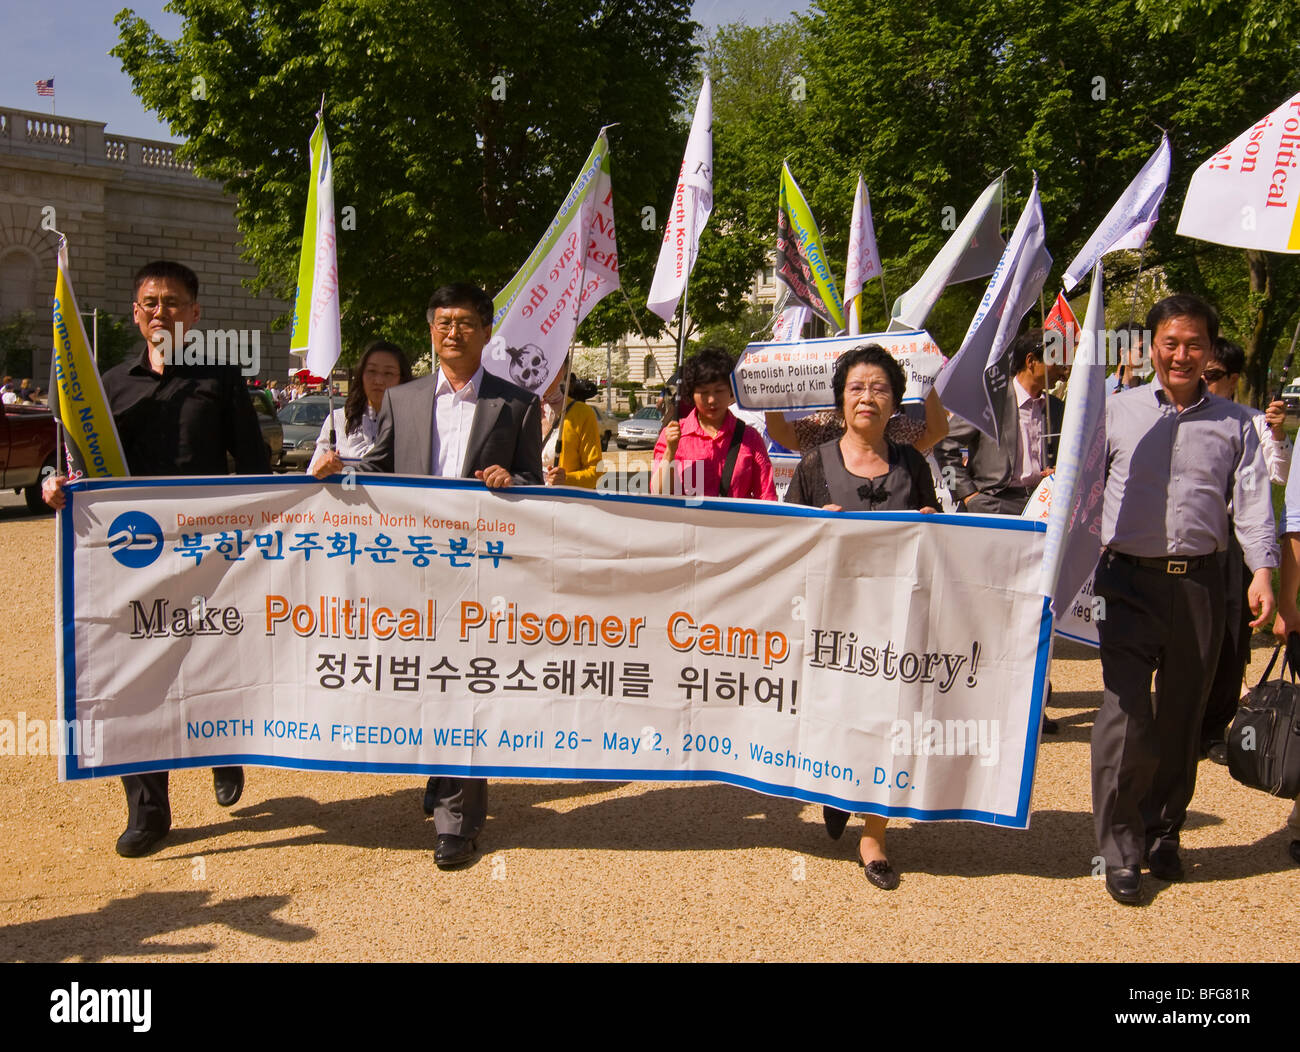 WASHINGTON, DC, USA - Protestors march demonstrating against North Korean political prisoner camps. Stock Photo